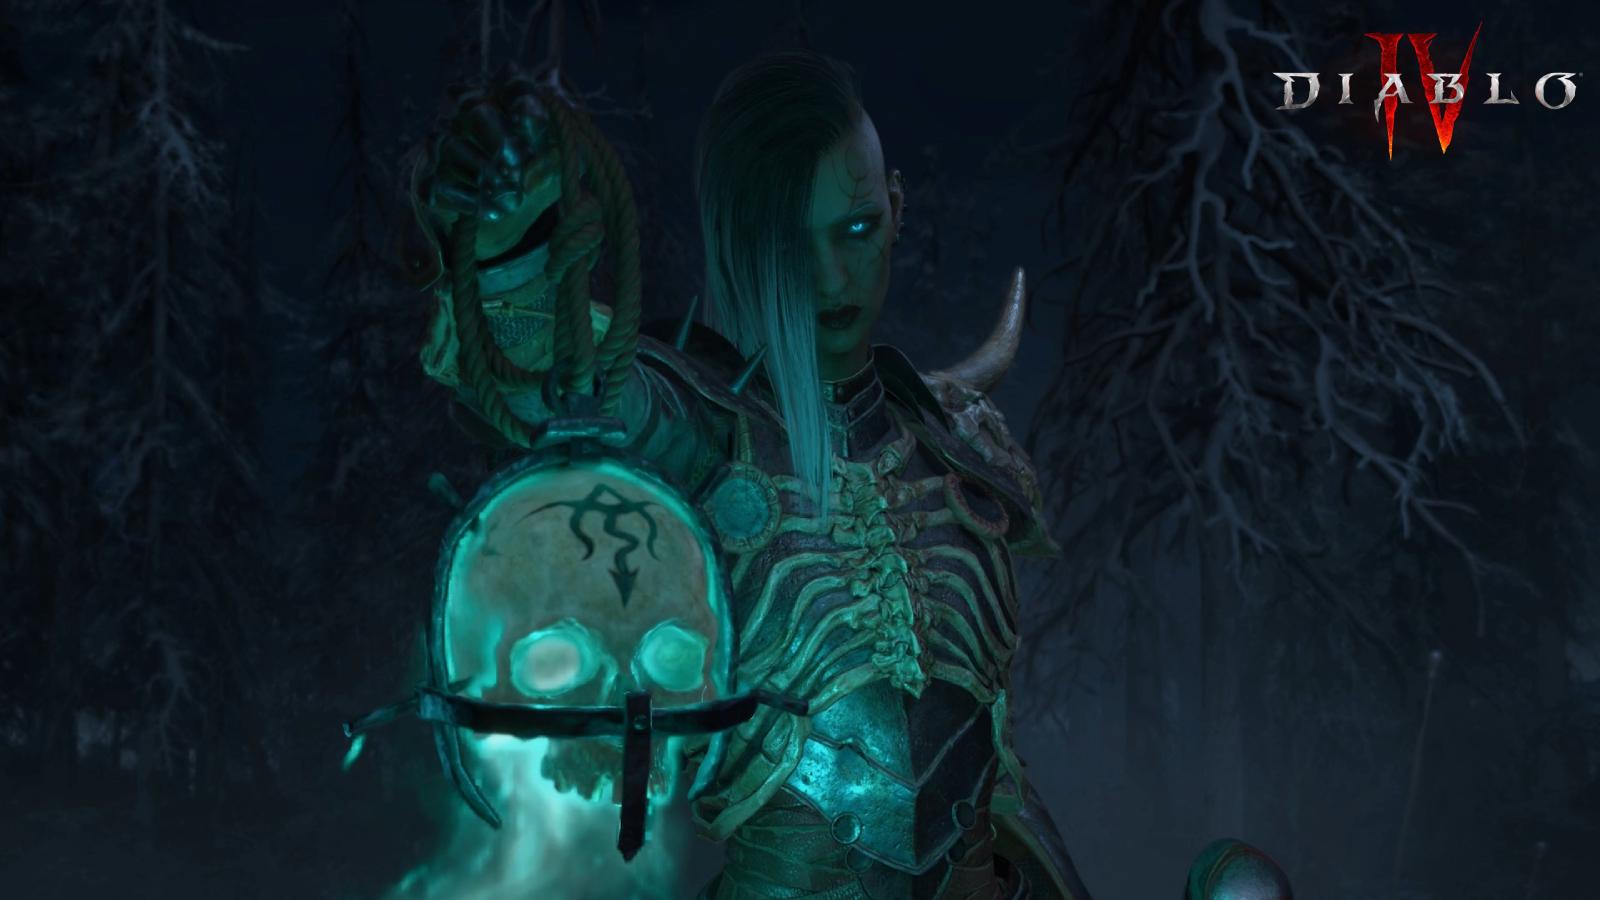 Diablo 4 Season 2 Tier List: The Best Builds For Leveling, Endgame